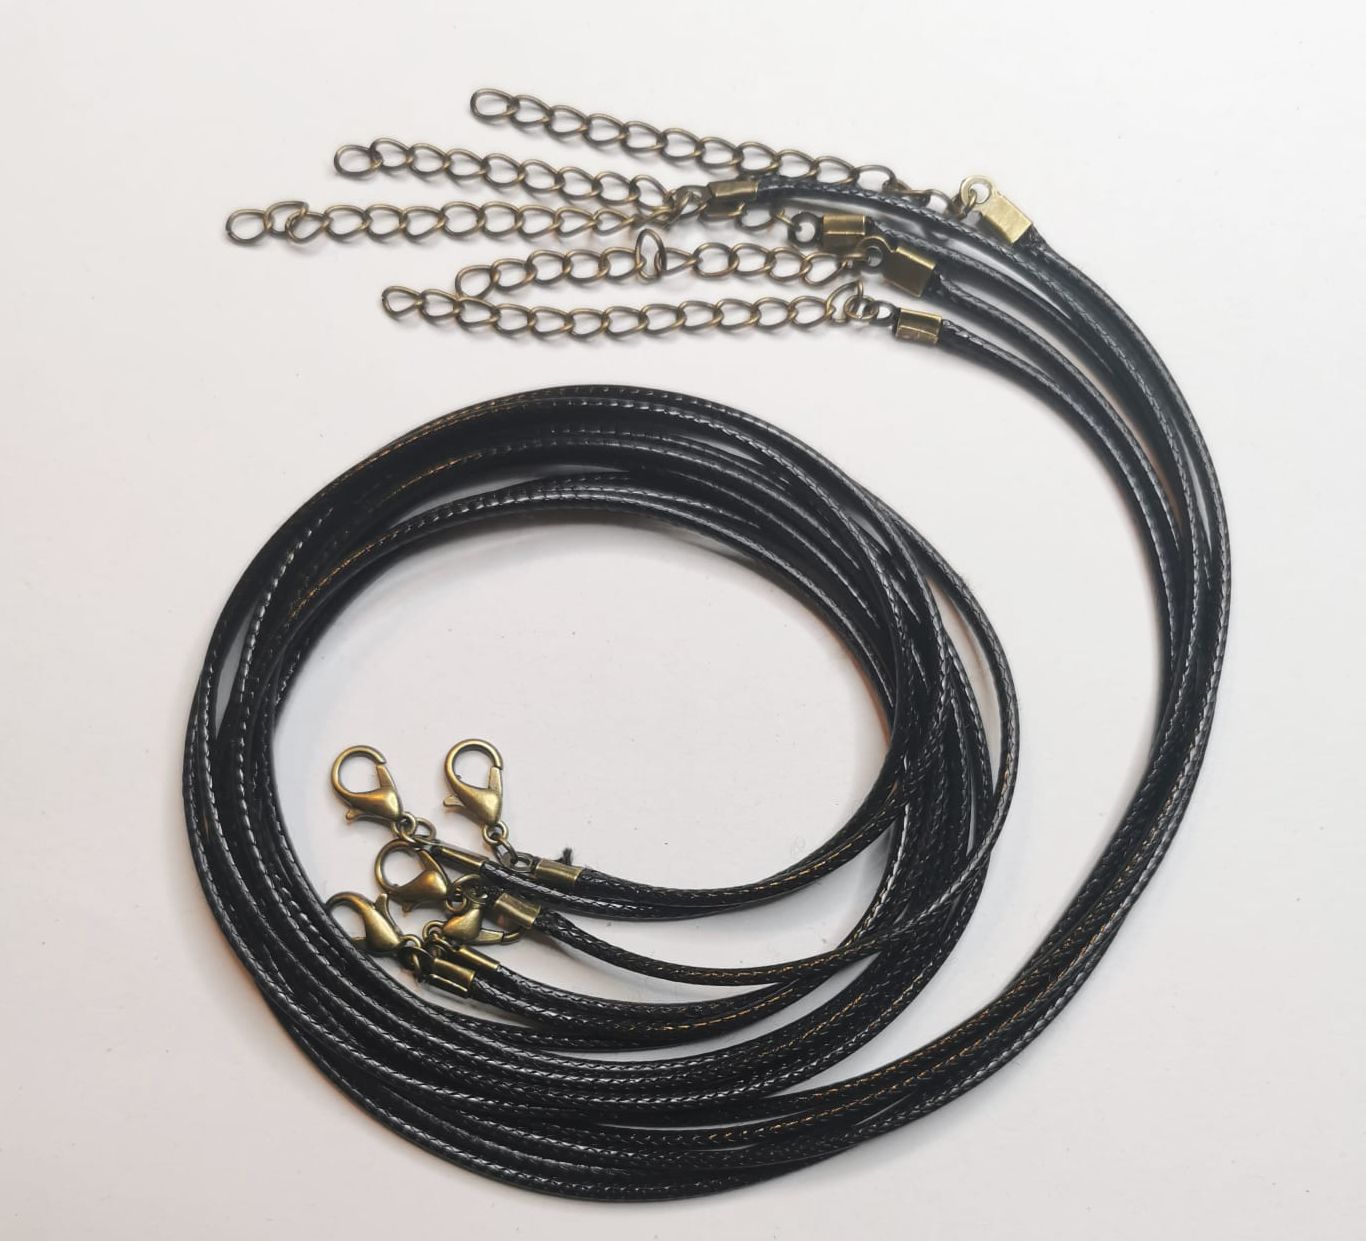 63cm(25") Long Black Faux Leather 2mm Cord with Antique Bronze Clasp Necklace